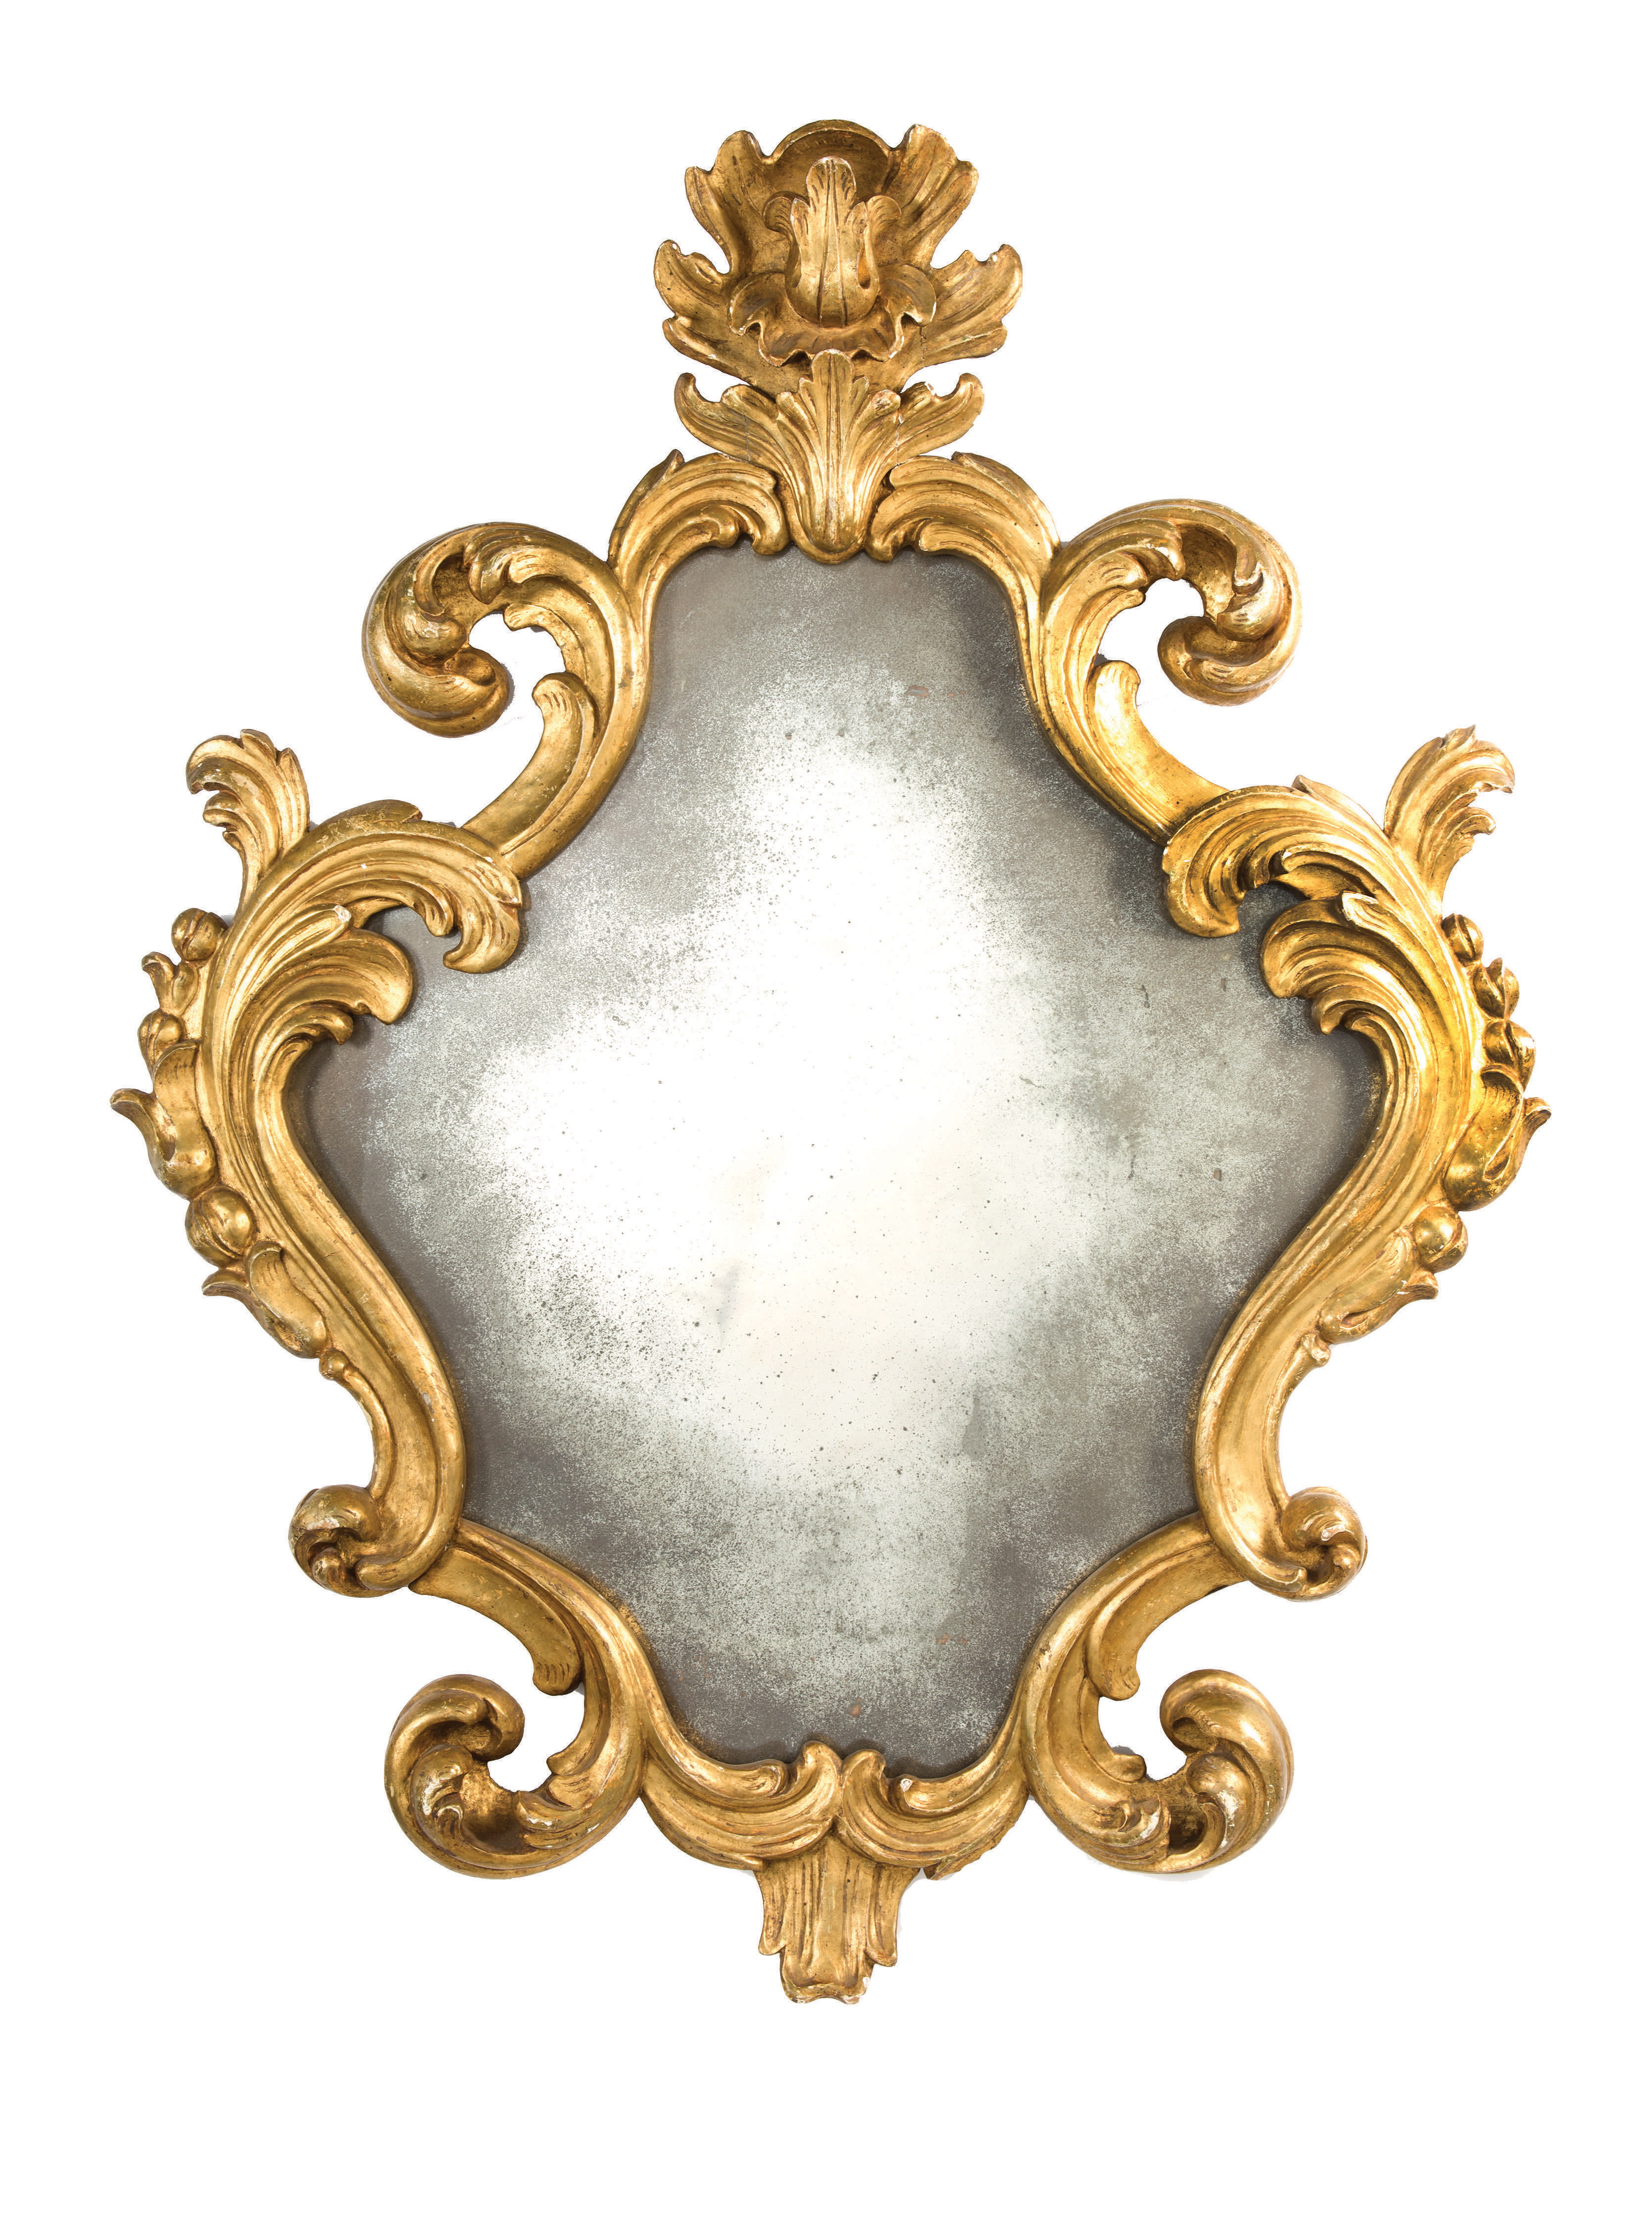 A large Italian giltwood mirror, 19th century